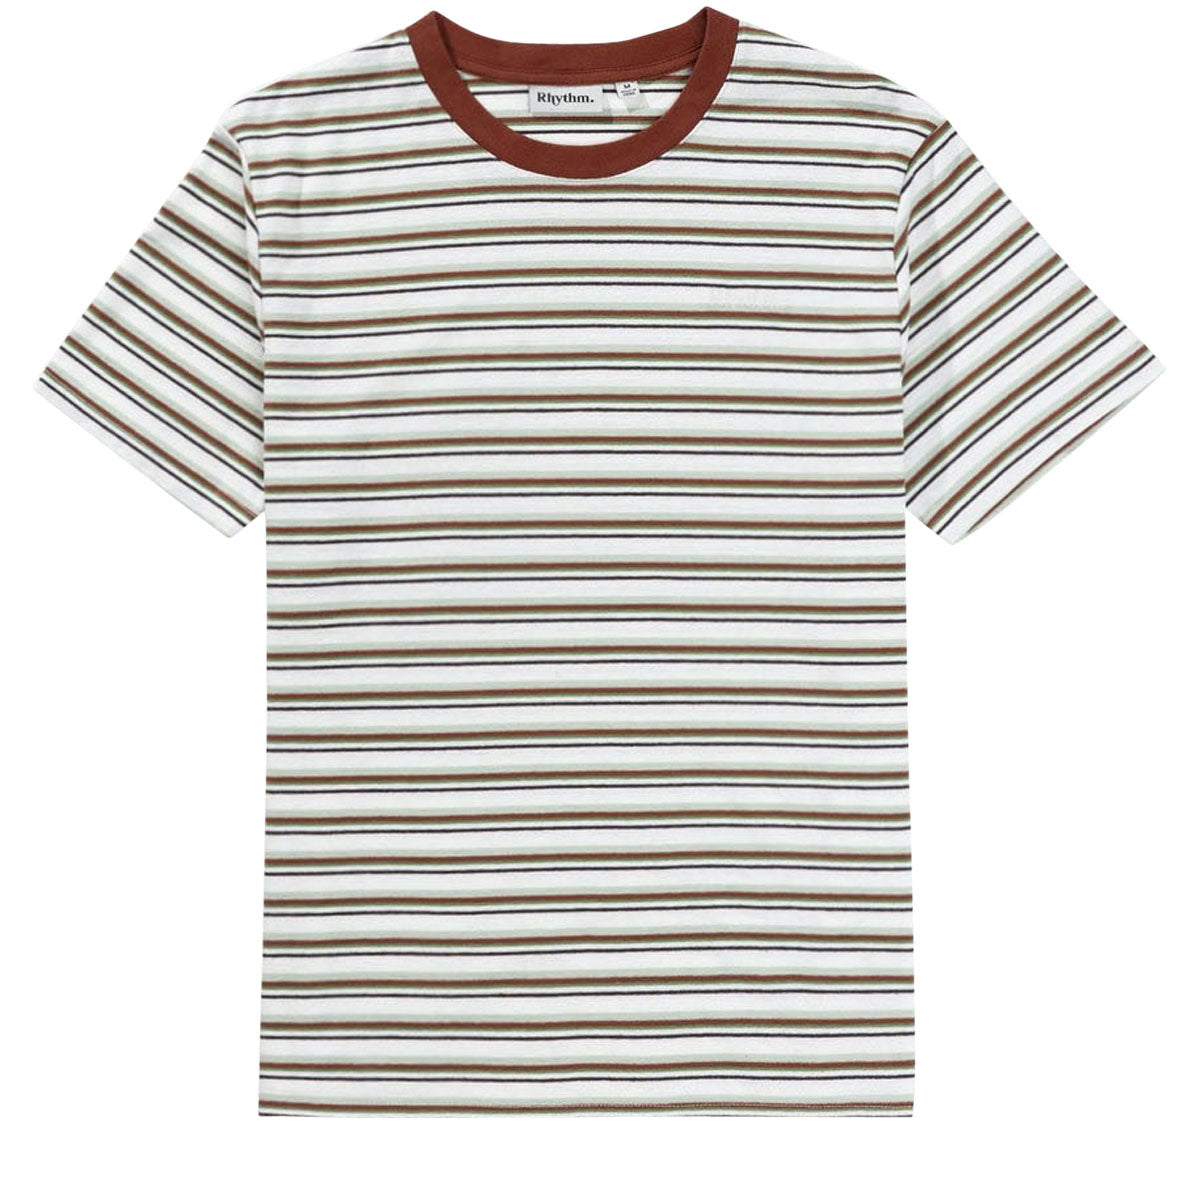 Rhythm Everyday Stripe T-Shirt - Natural/Natural image 1